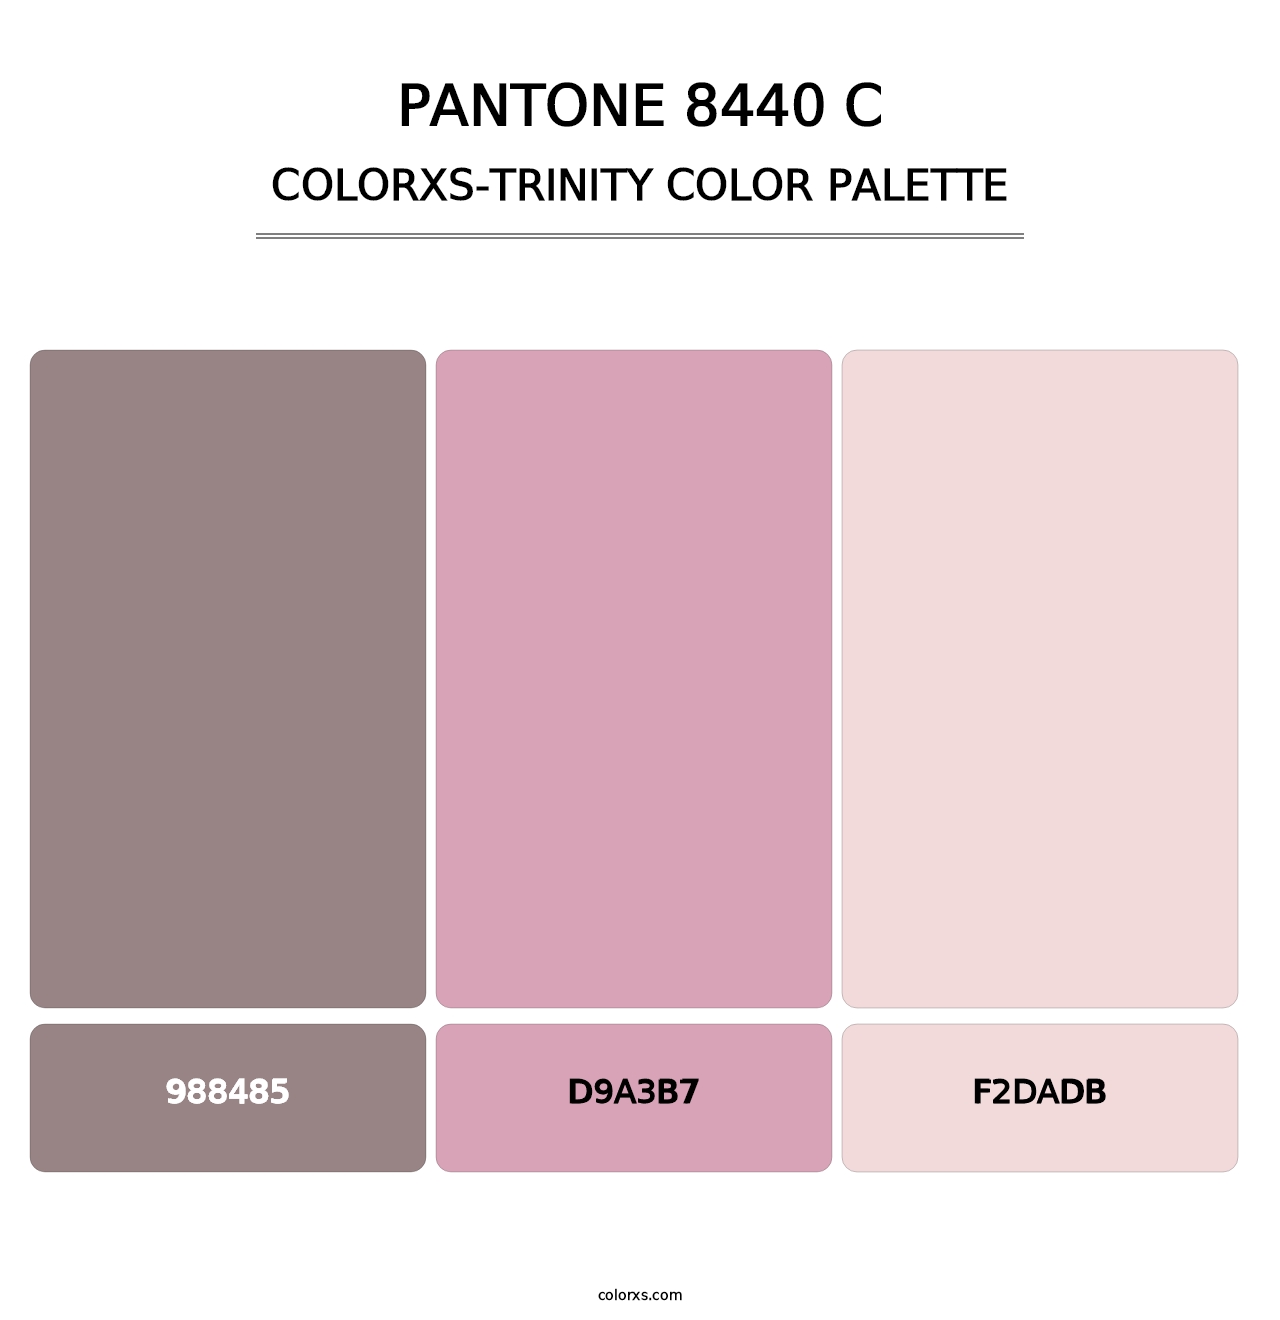 PANTONE 8440 C - Colorxs Trinity Palette